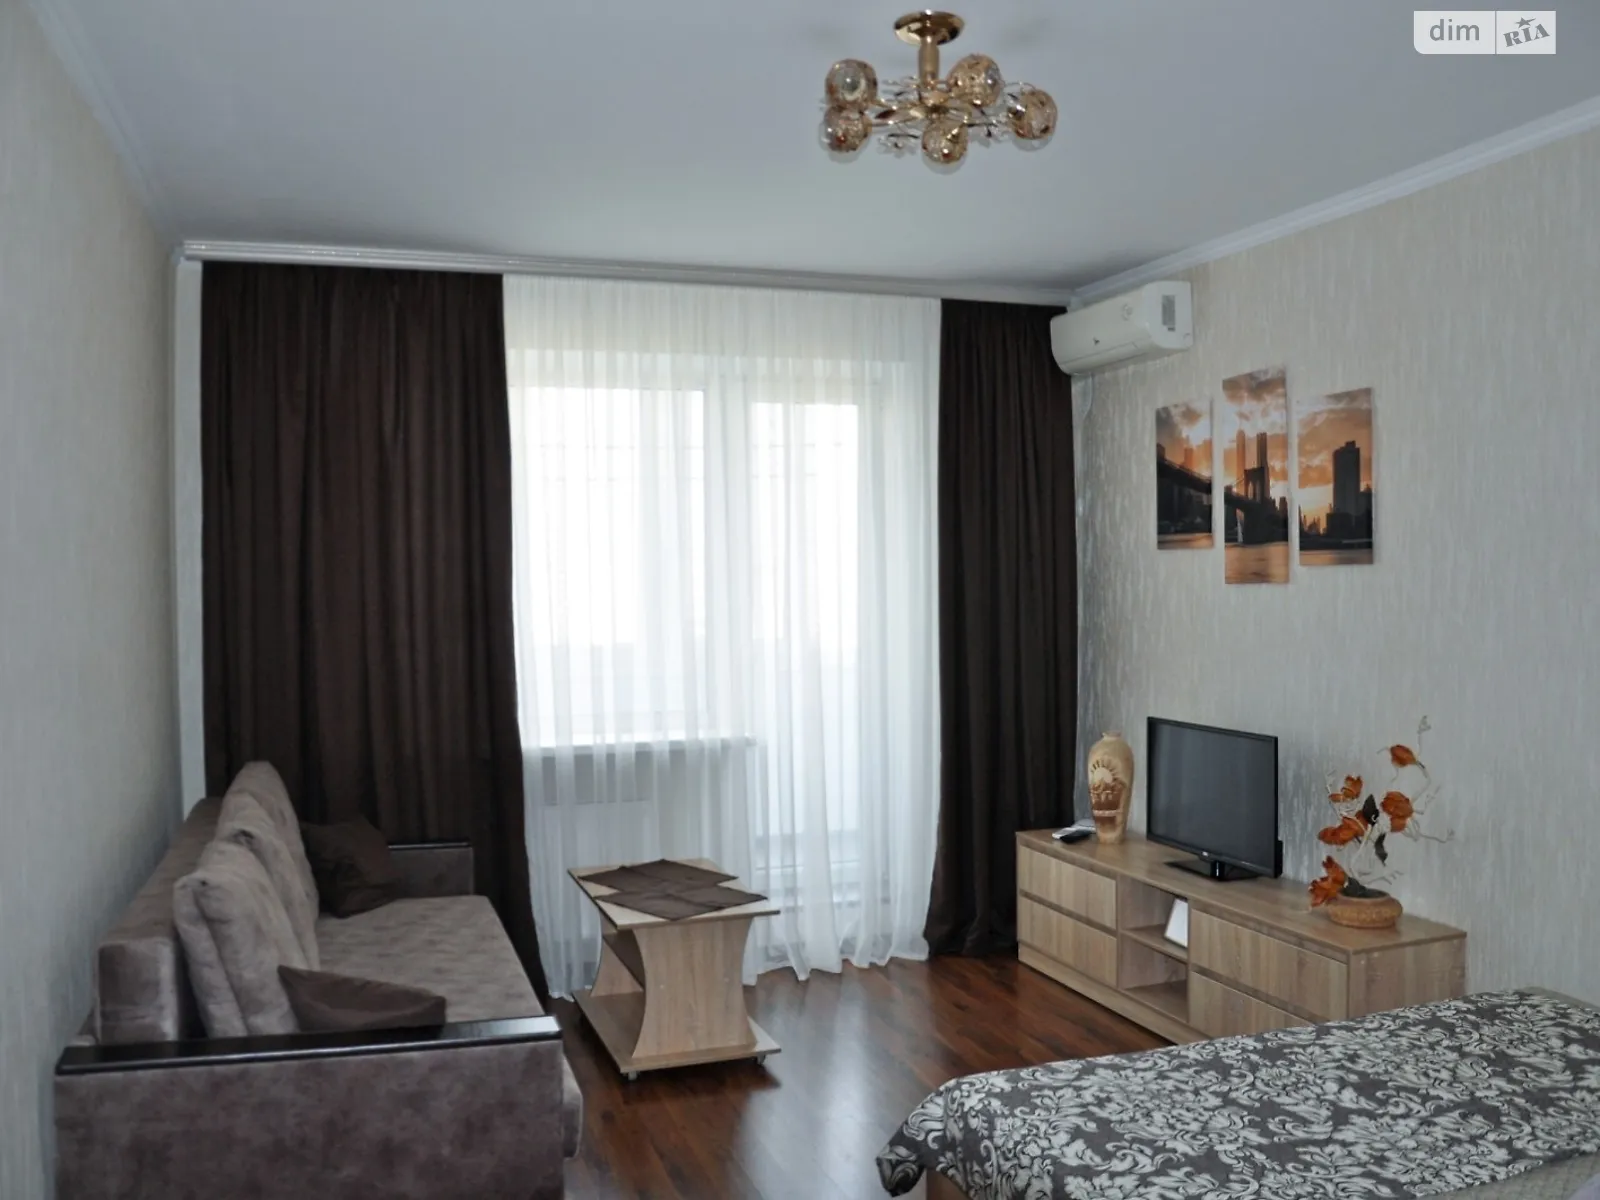 1-кімнатна квартира у Запоріжжі, цена: 1100 грн